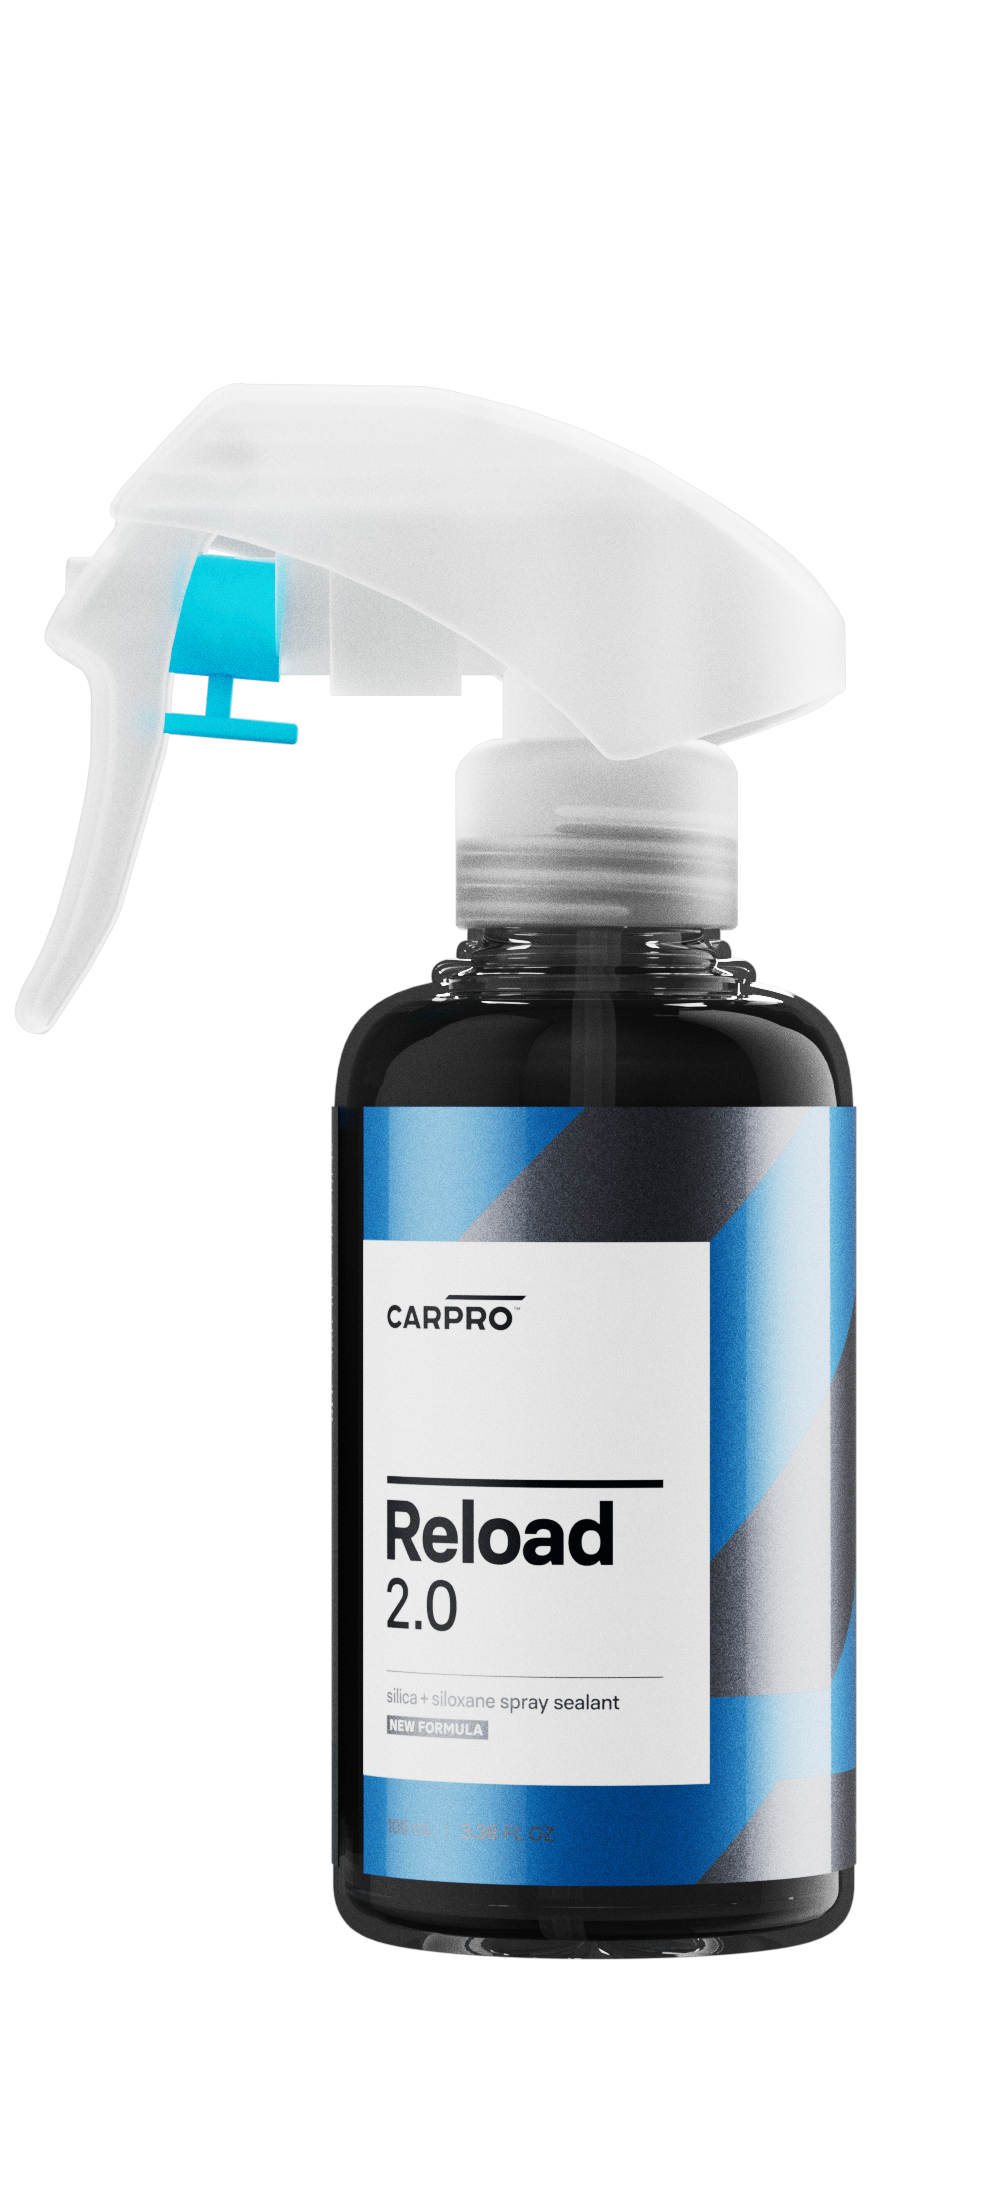 CARPRO Reload 2.0 100ml - SiO2 based sealant